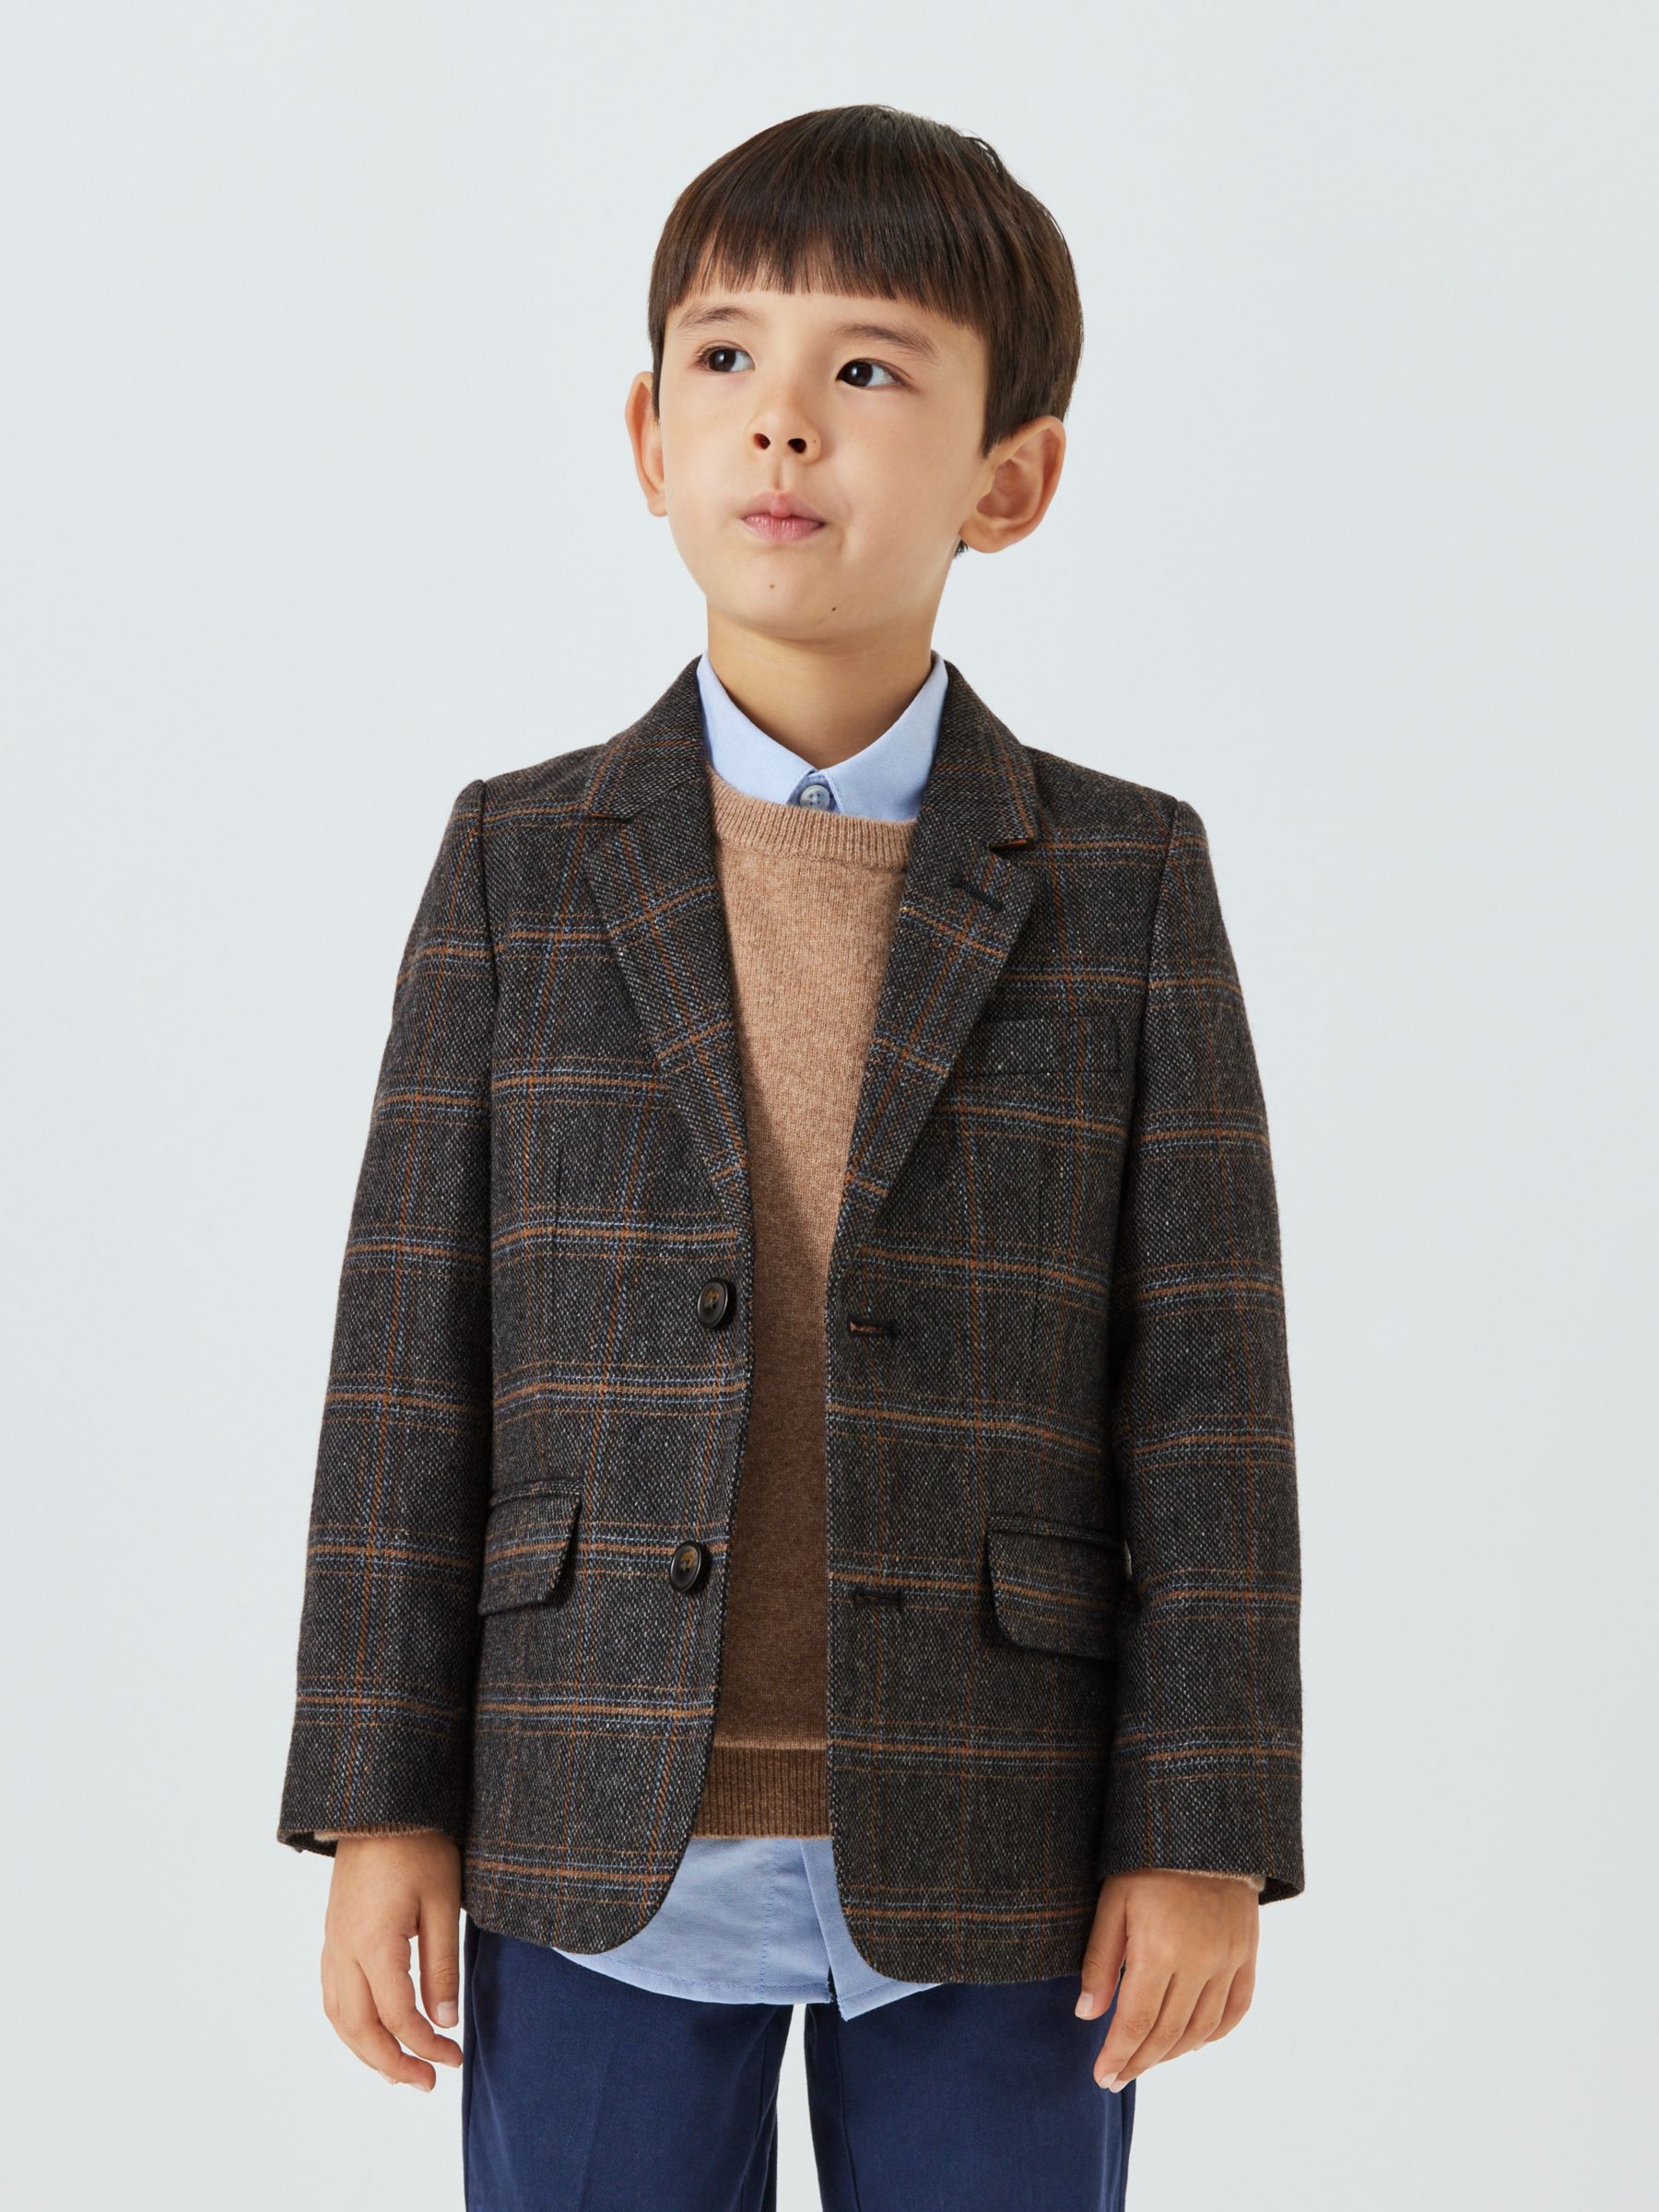 John Lewis Heirloom Collection Kids' Tweed Check Blazer, Grey, 13 years